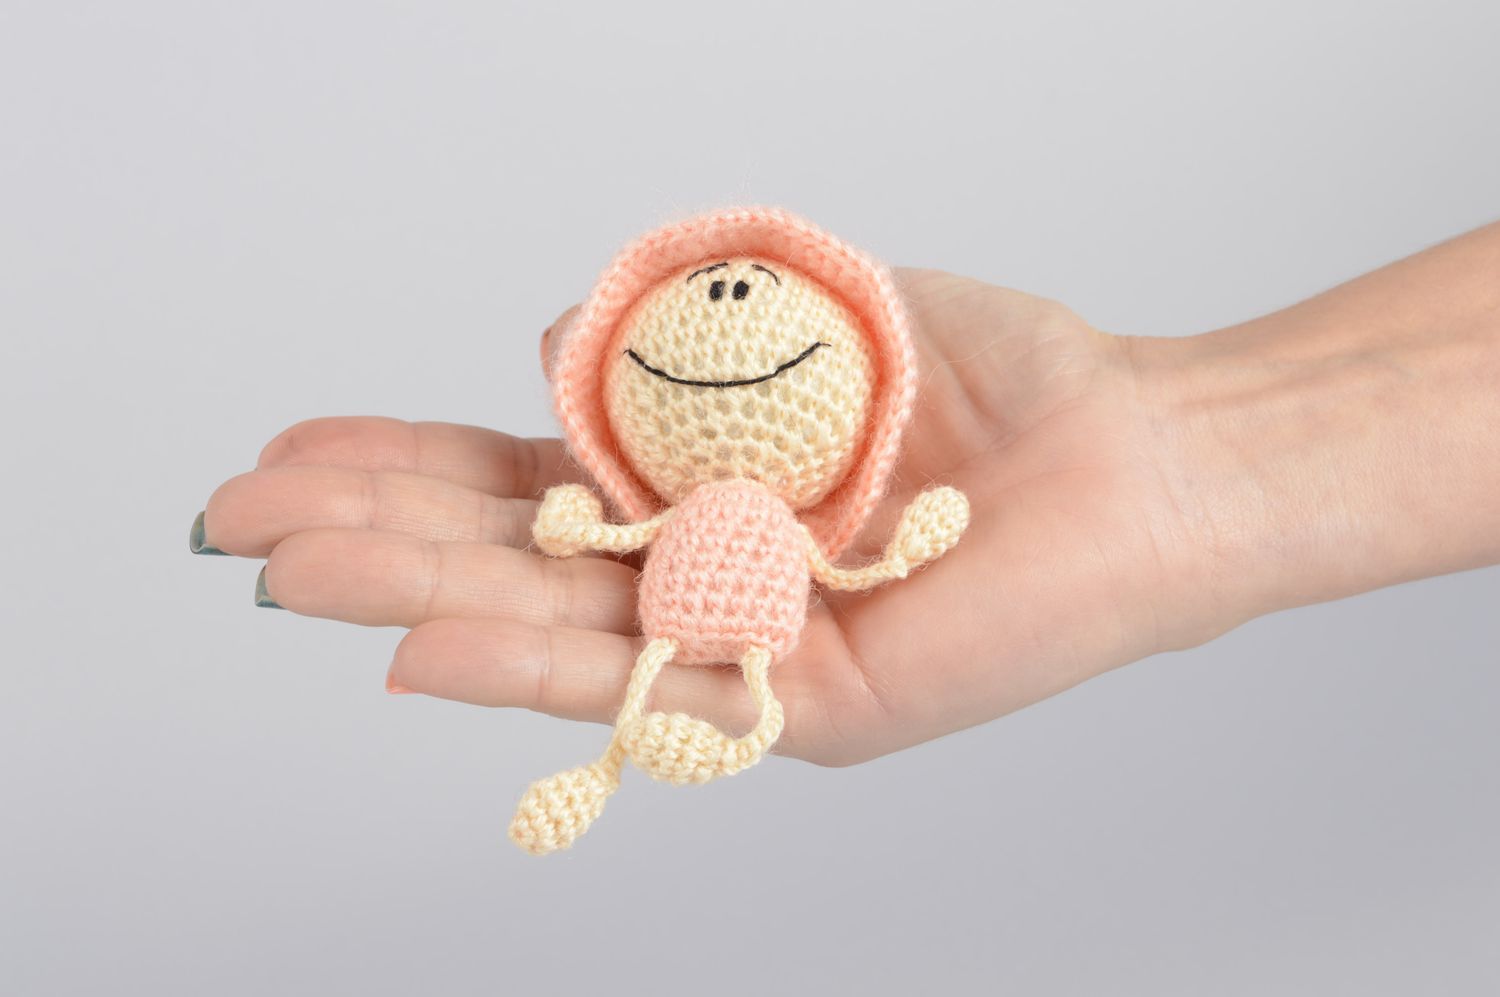 Nice handmade soft toy crochet toy stuffed toy for kids birthday gift ideas photo 4